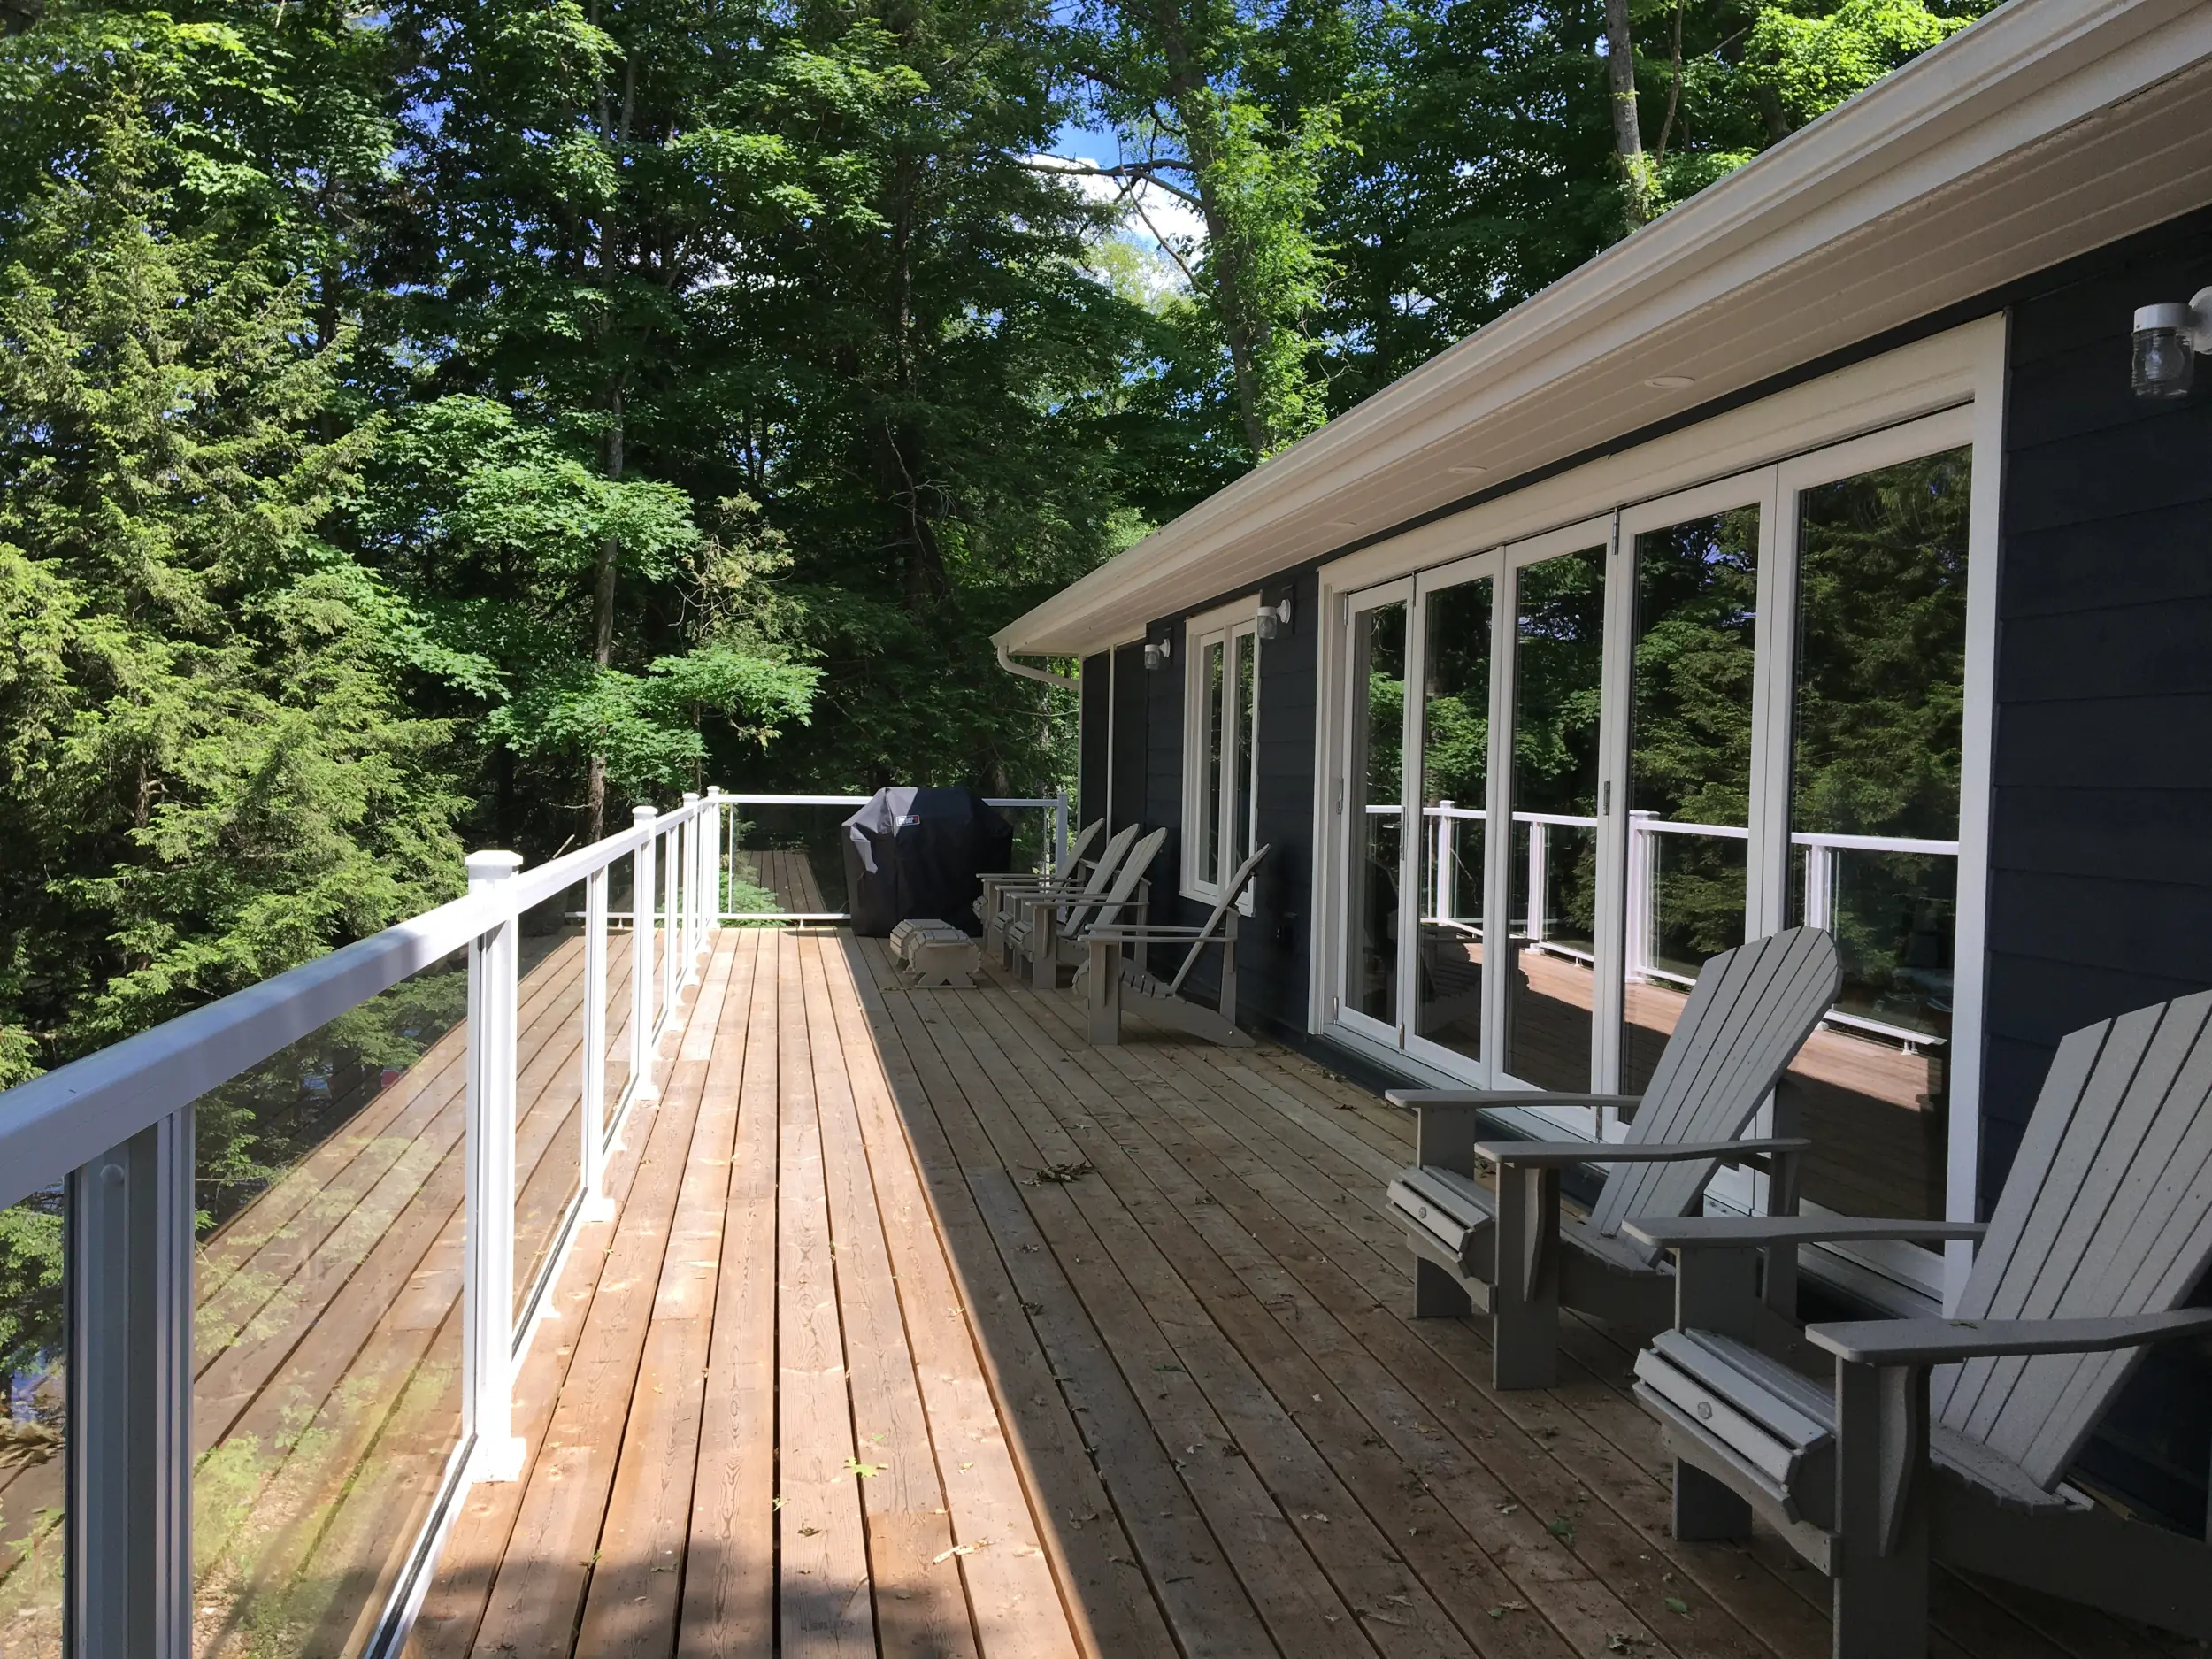 A sunny deck, Muskoka chairs and large bifolding glass doors facing Lake Muskoka.